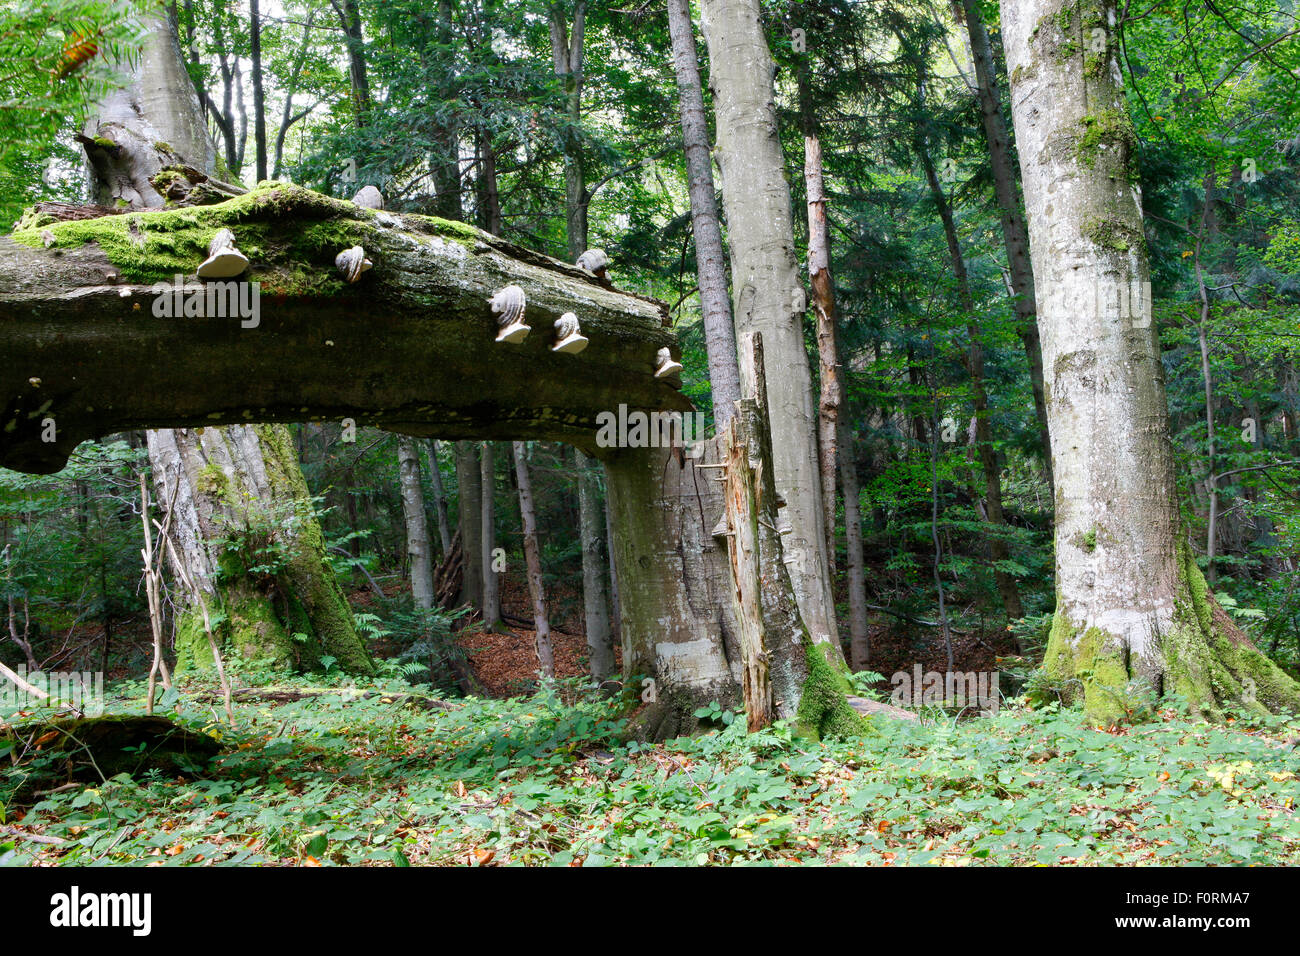 Carpathian Beech Forest with bracket fungi on fallen Beech tree trunk Bieszczady, Carpathian Mountains, Poland, September. Stock Photo